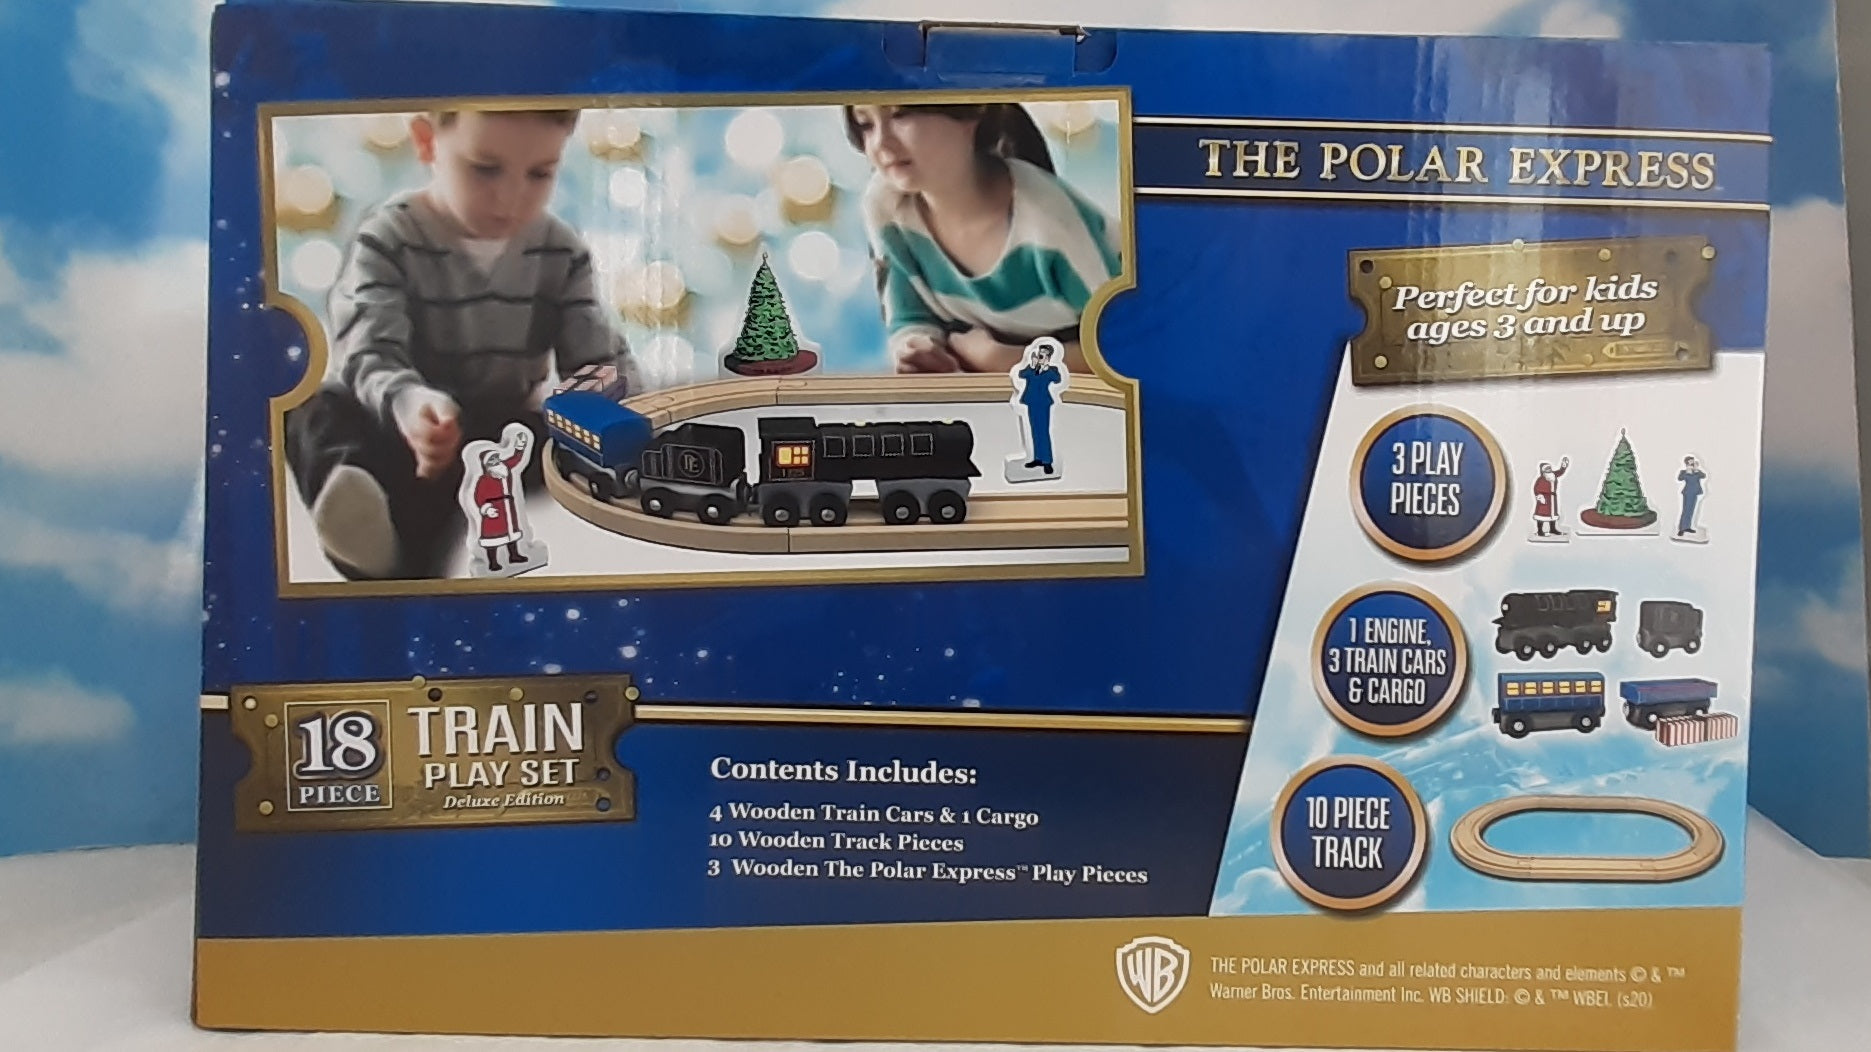 The Polar Express Train Play Set